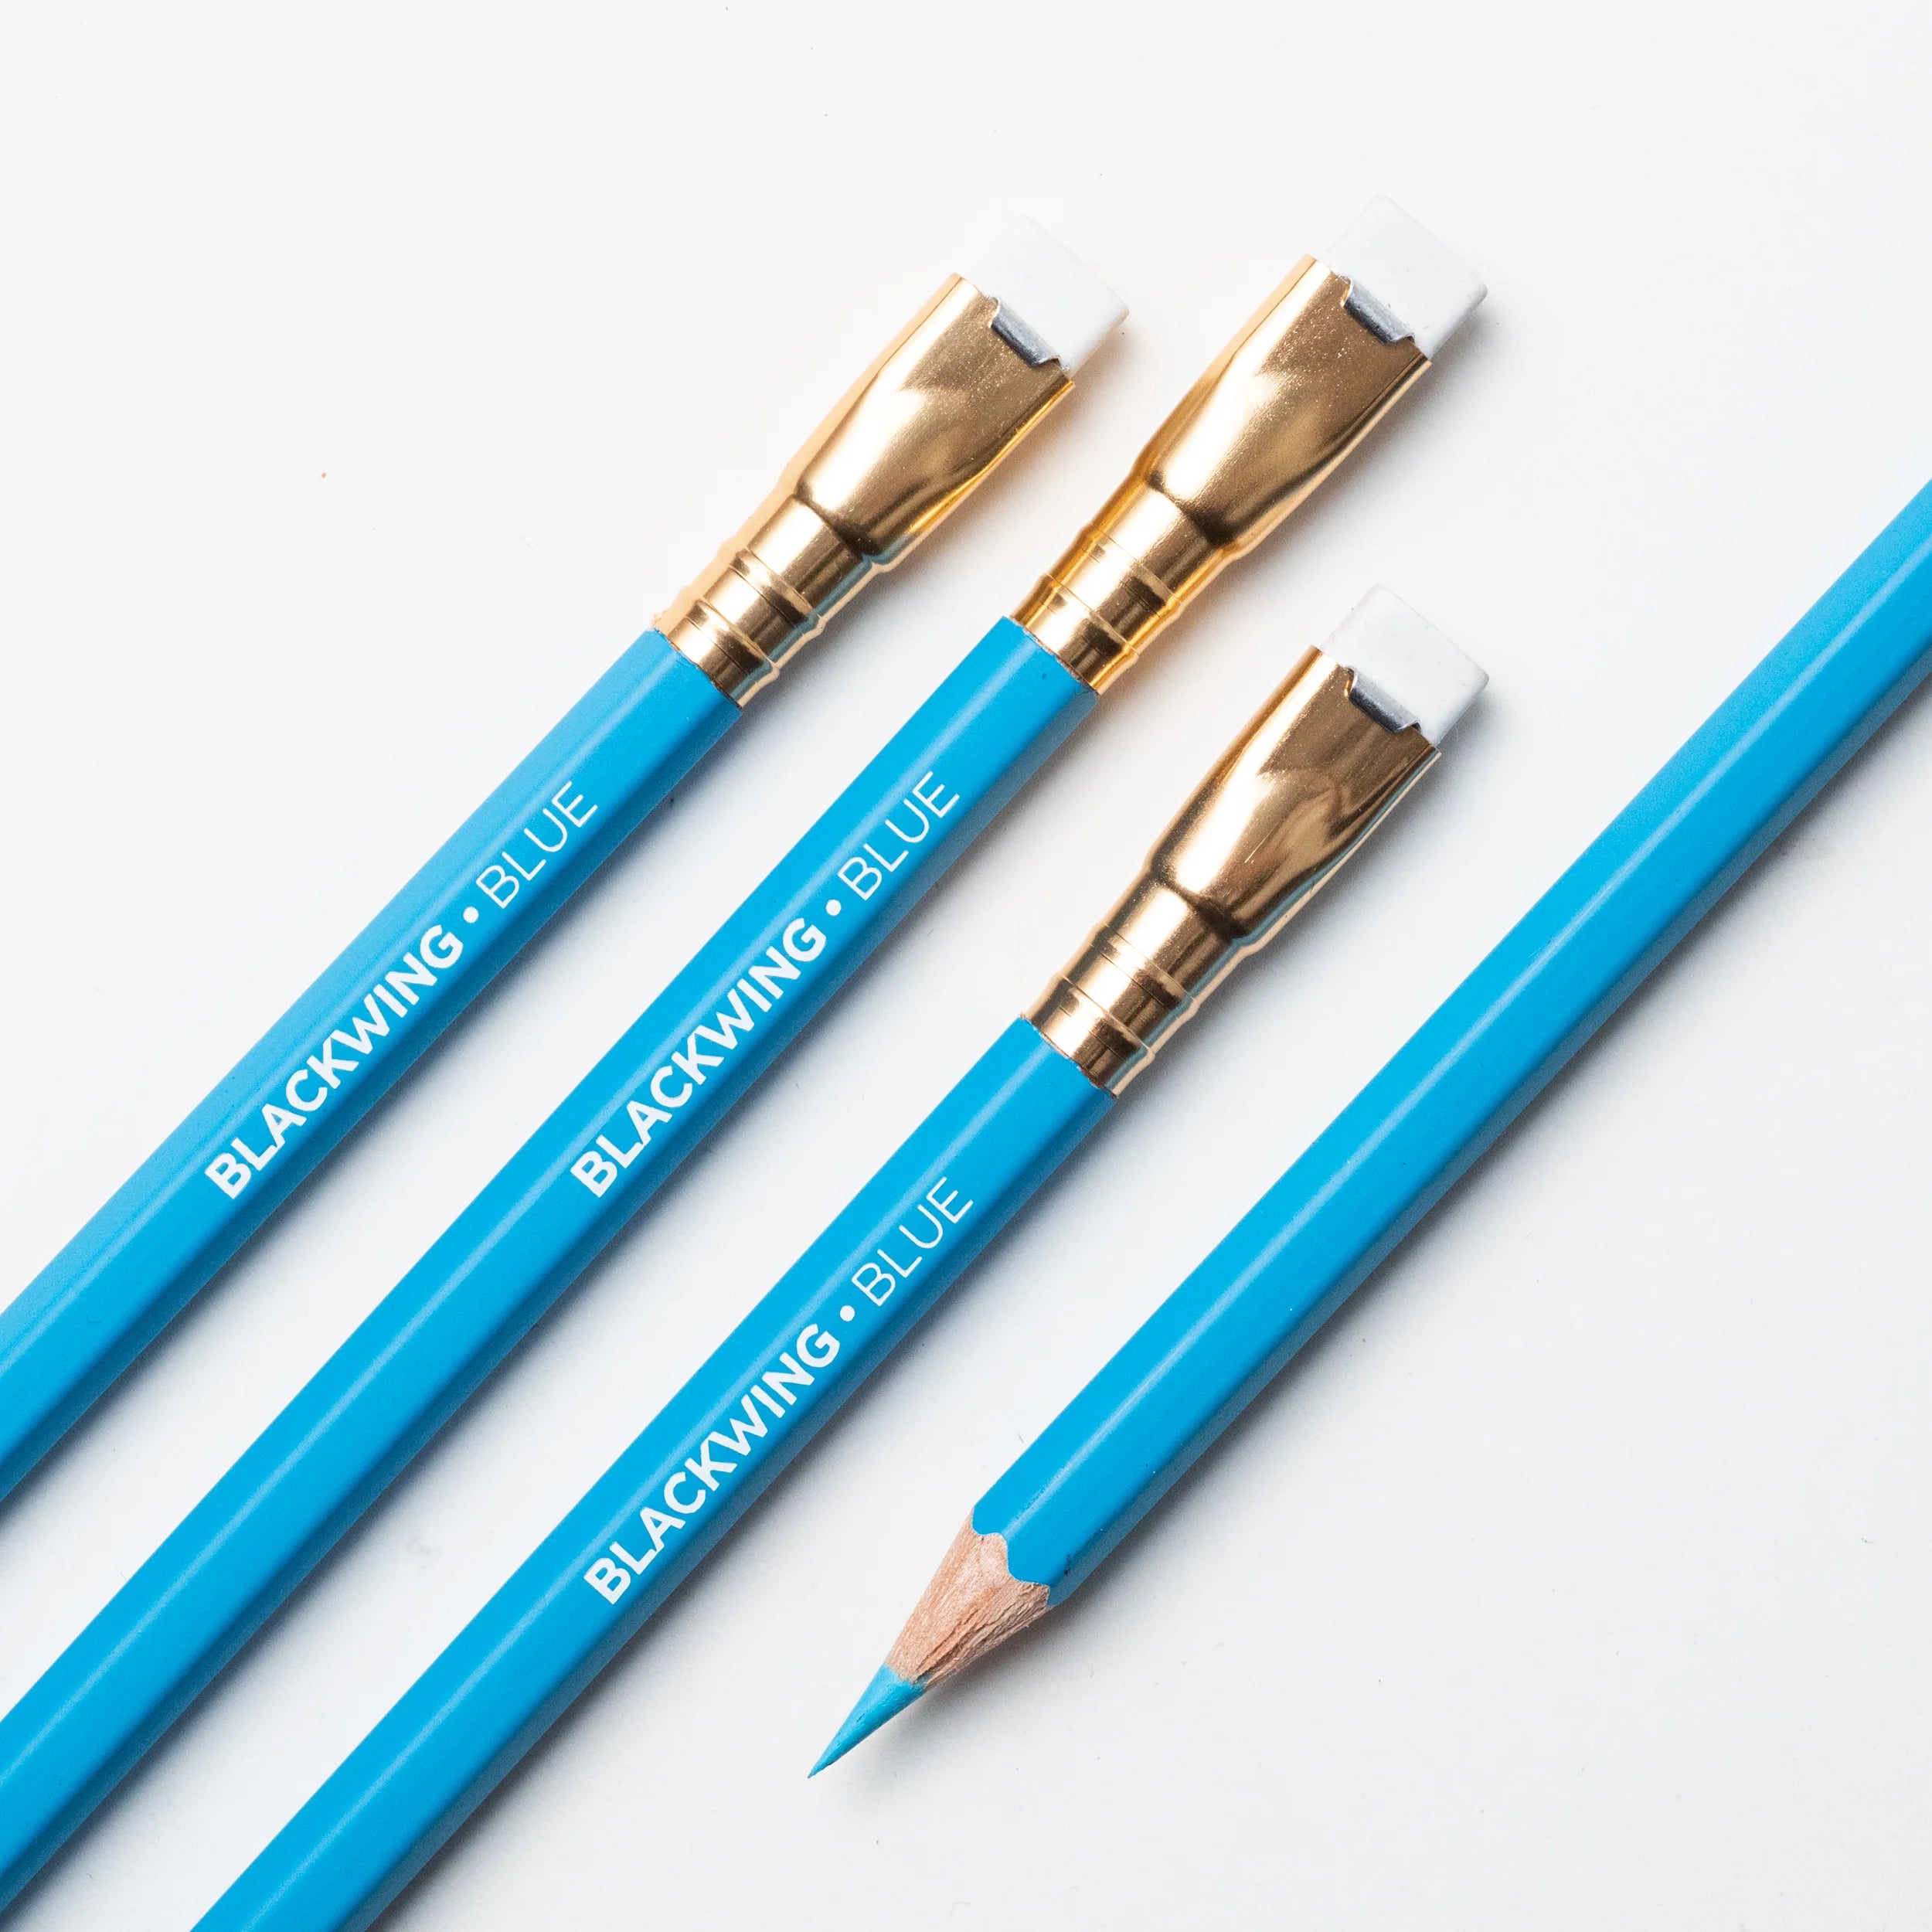 Blackwing Blue [4 pencils]